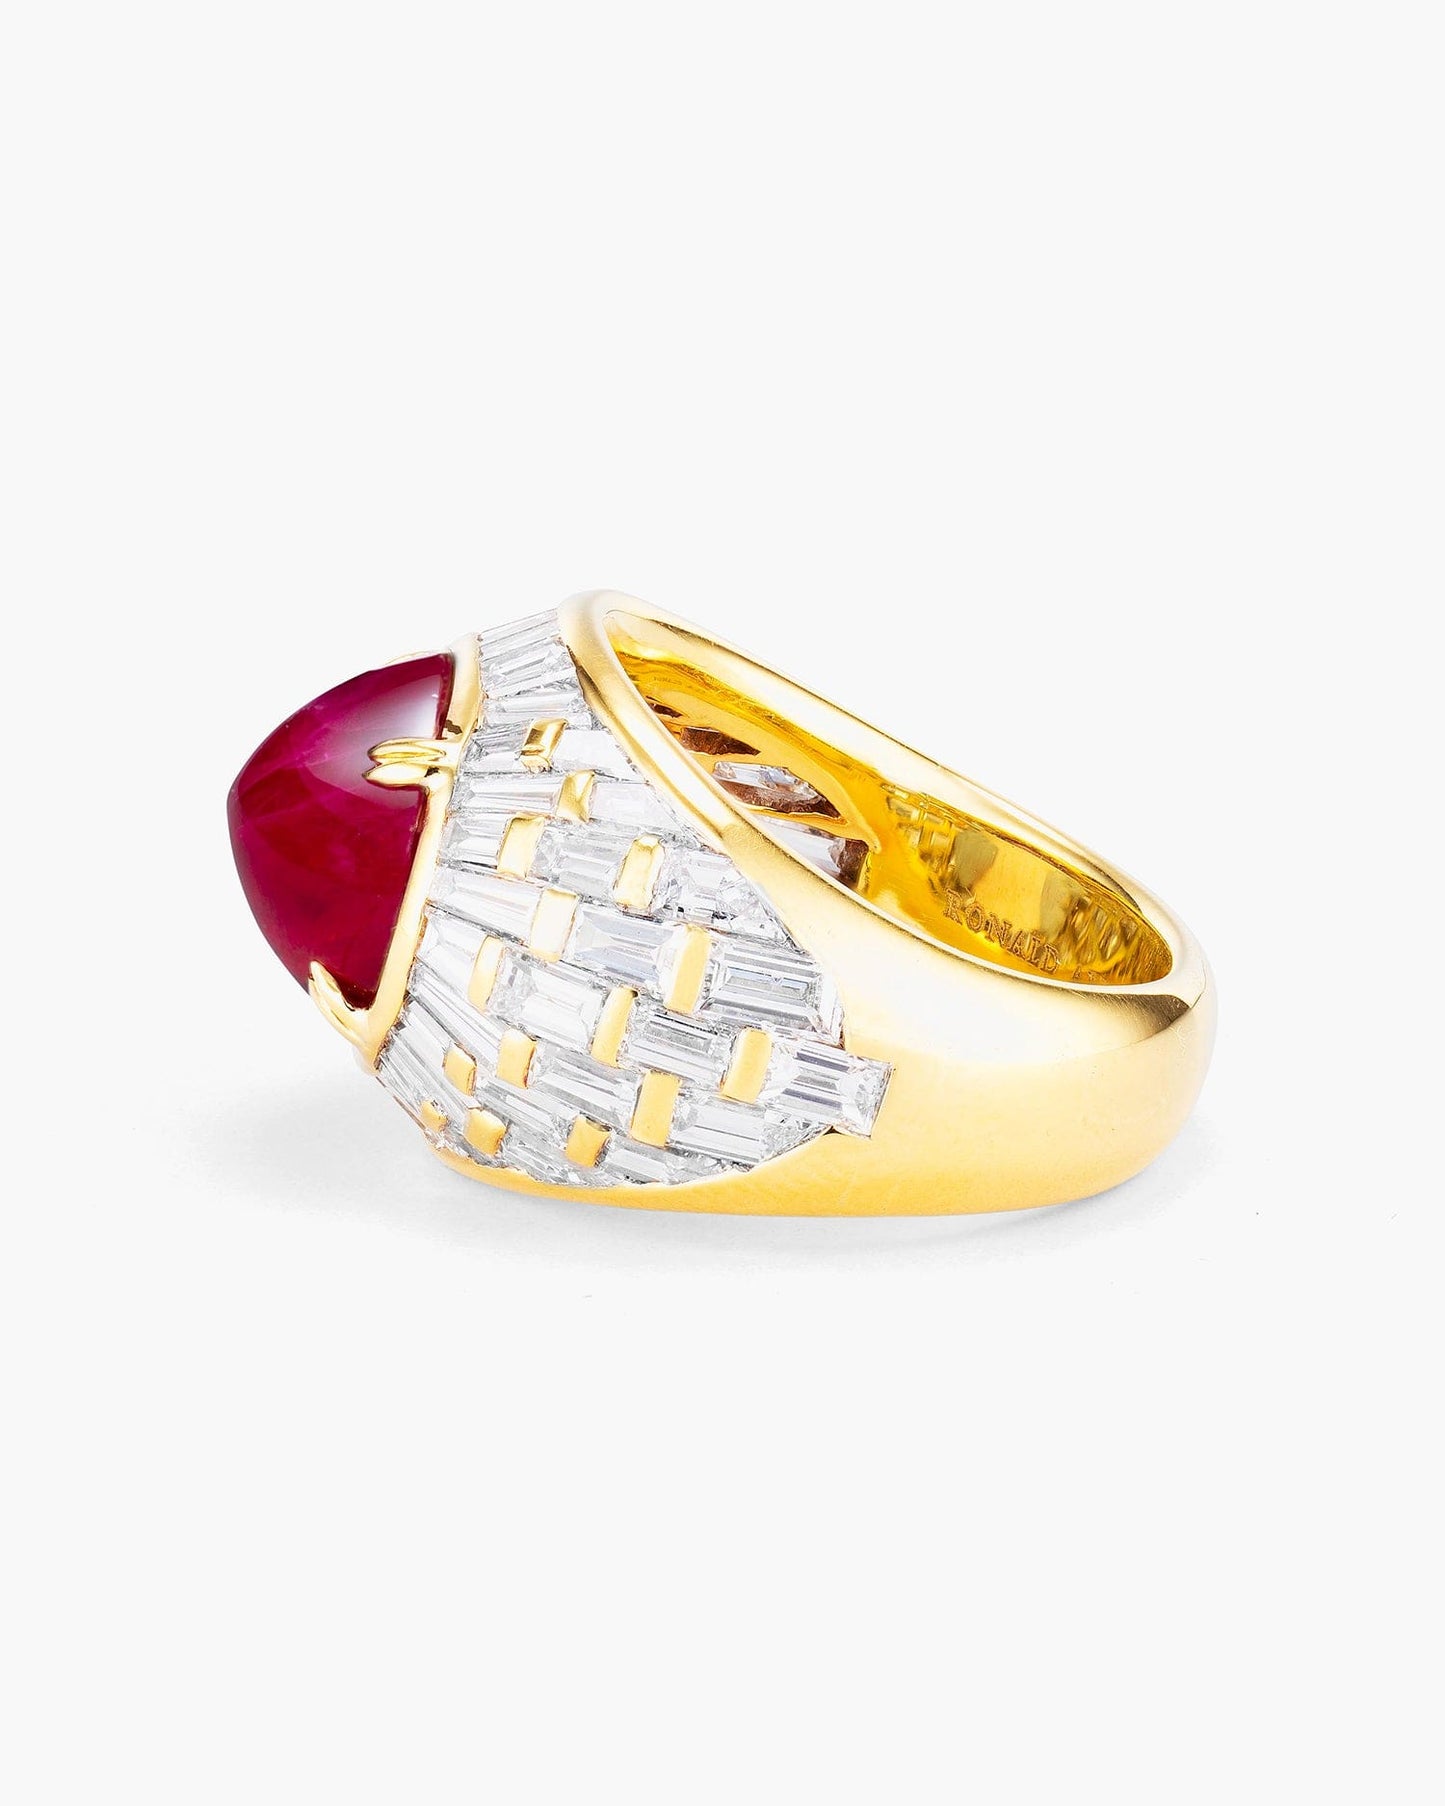 6.09 carat Cabochon Burmese Ruby and Diamond Ring